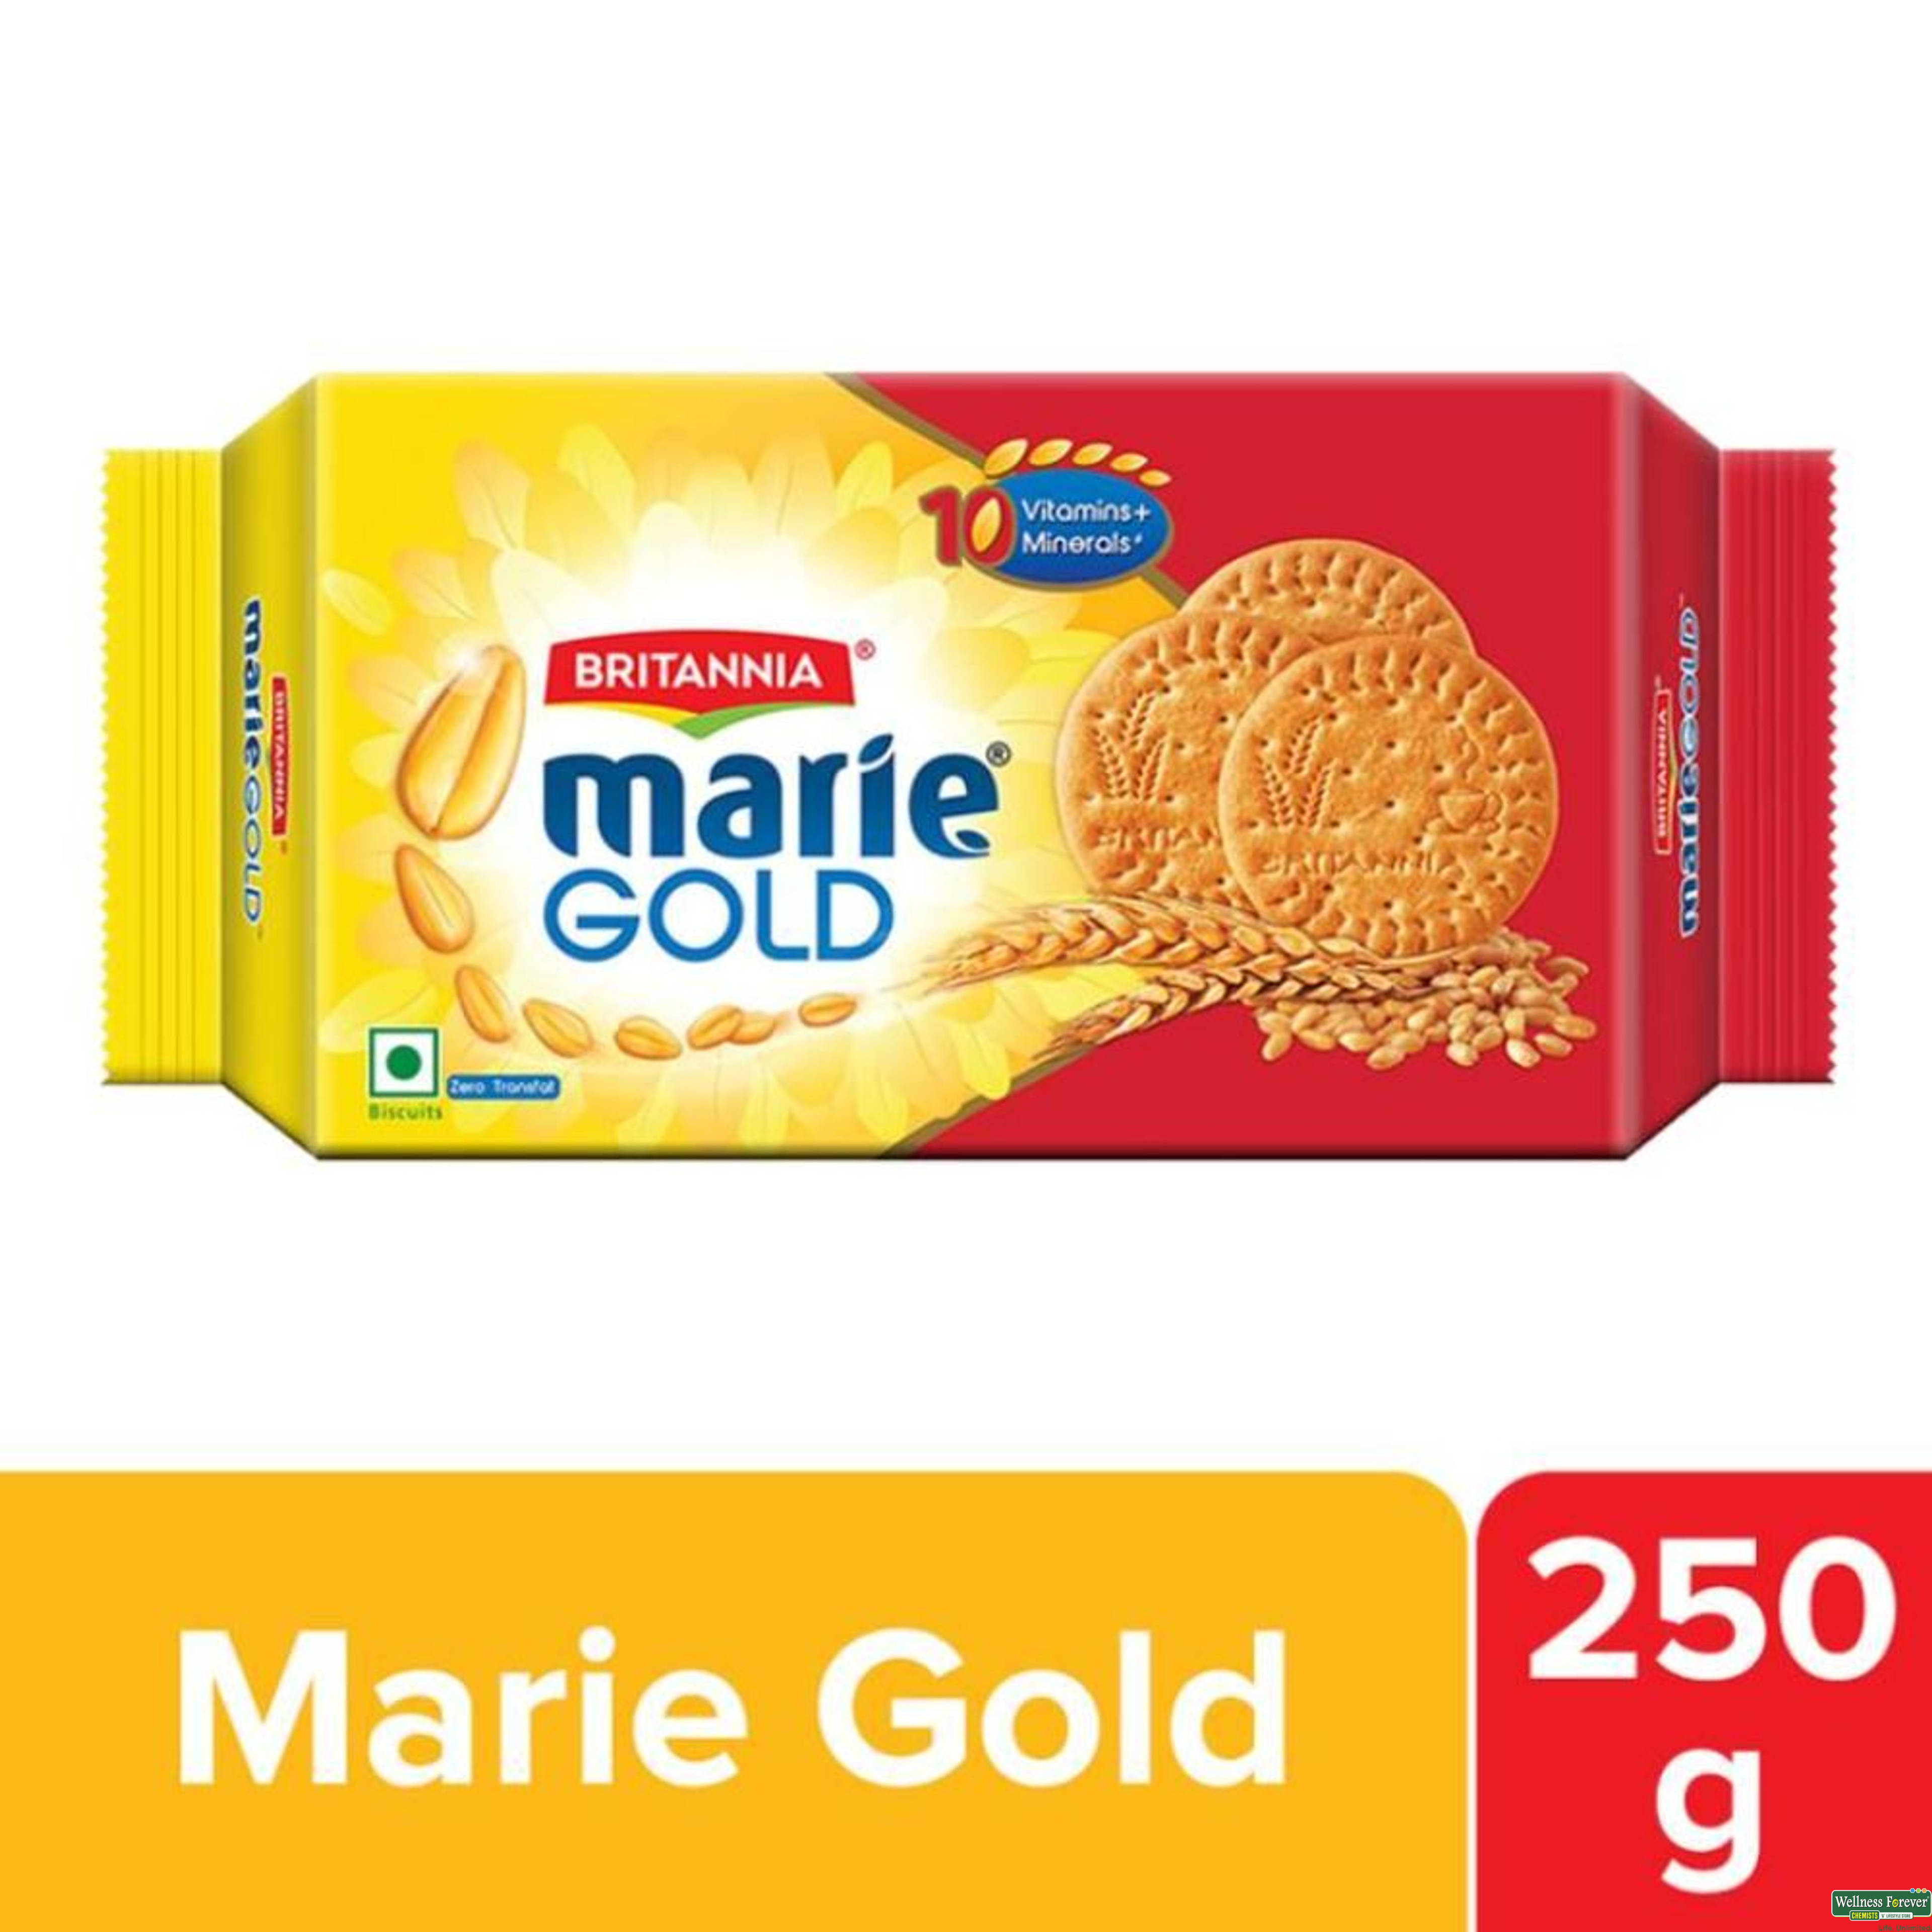 Britannia Marie Gold Biscuits, 250 g-image